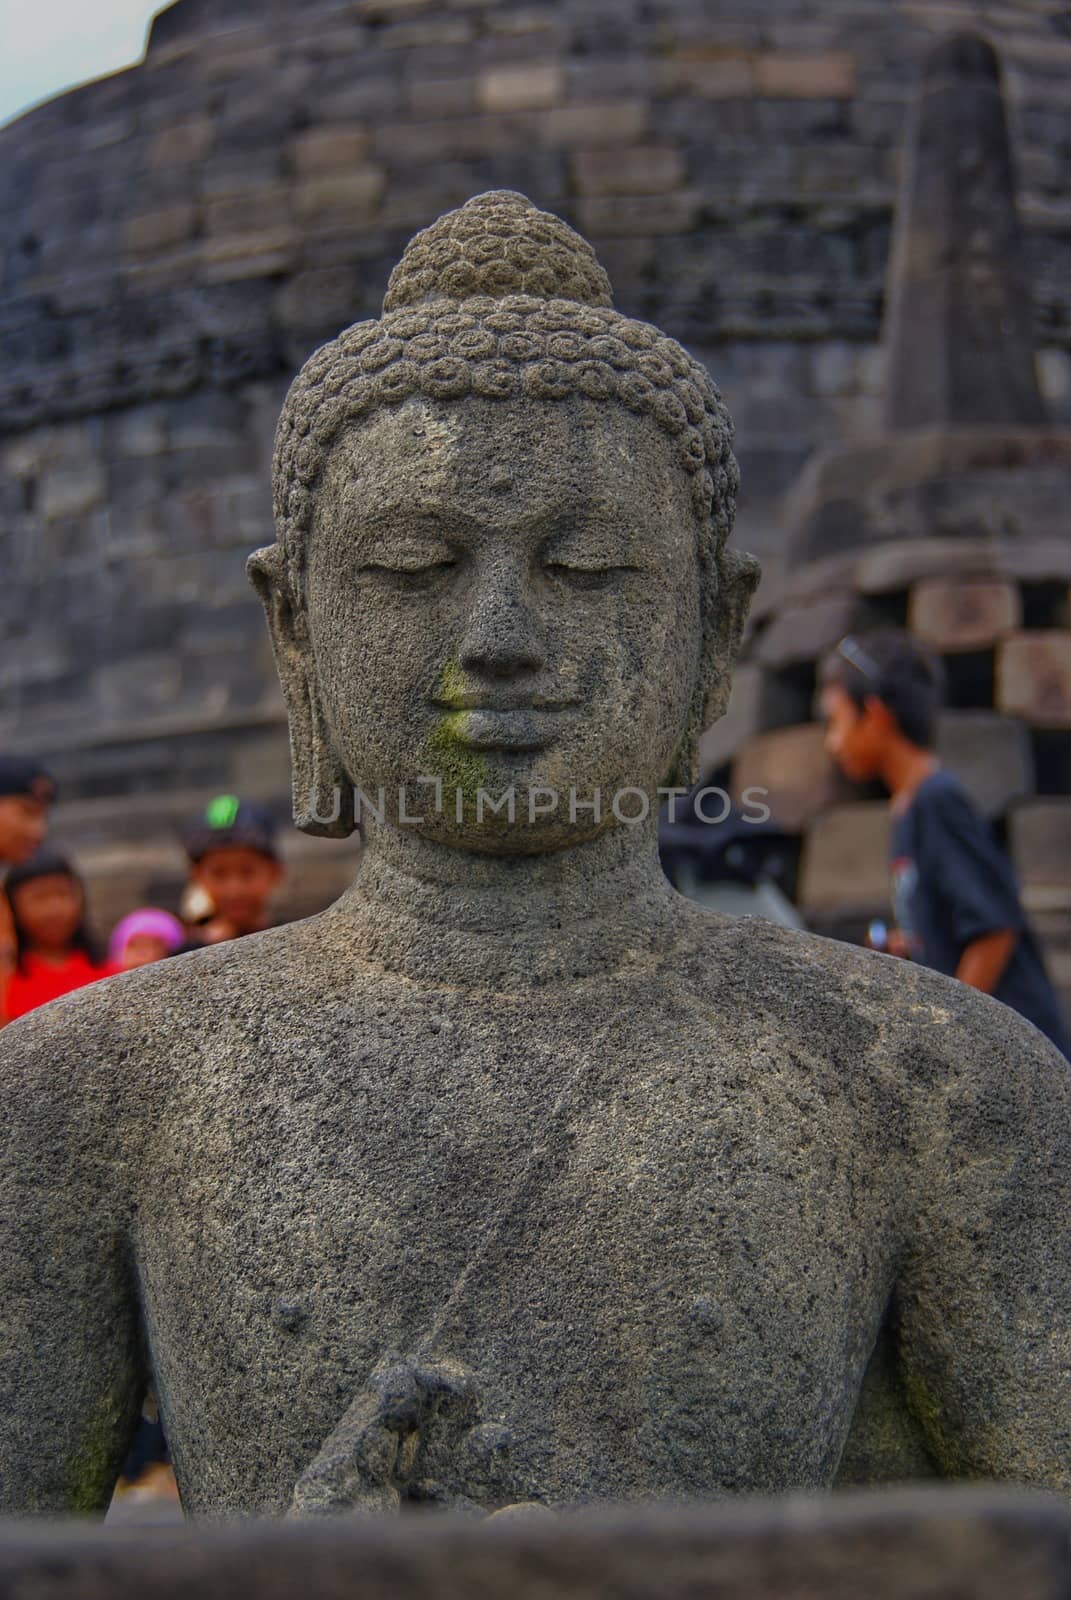 Image of sitting Buddha in Borobudur Temple, Jogjakarta, Indonesia by craigansibin